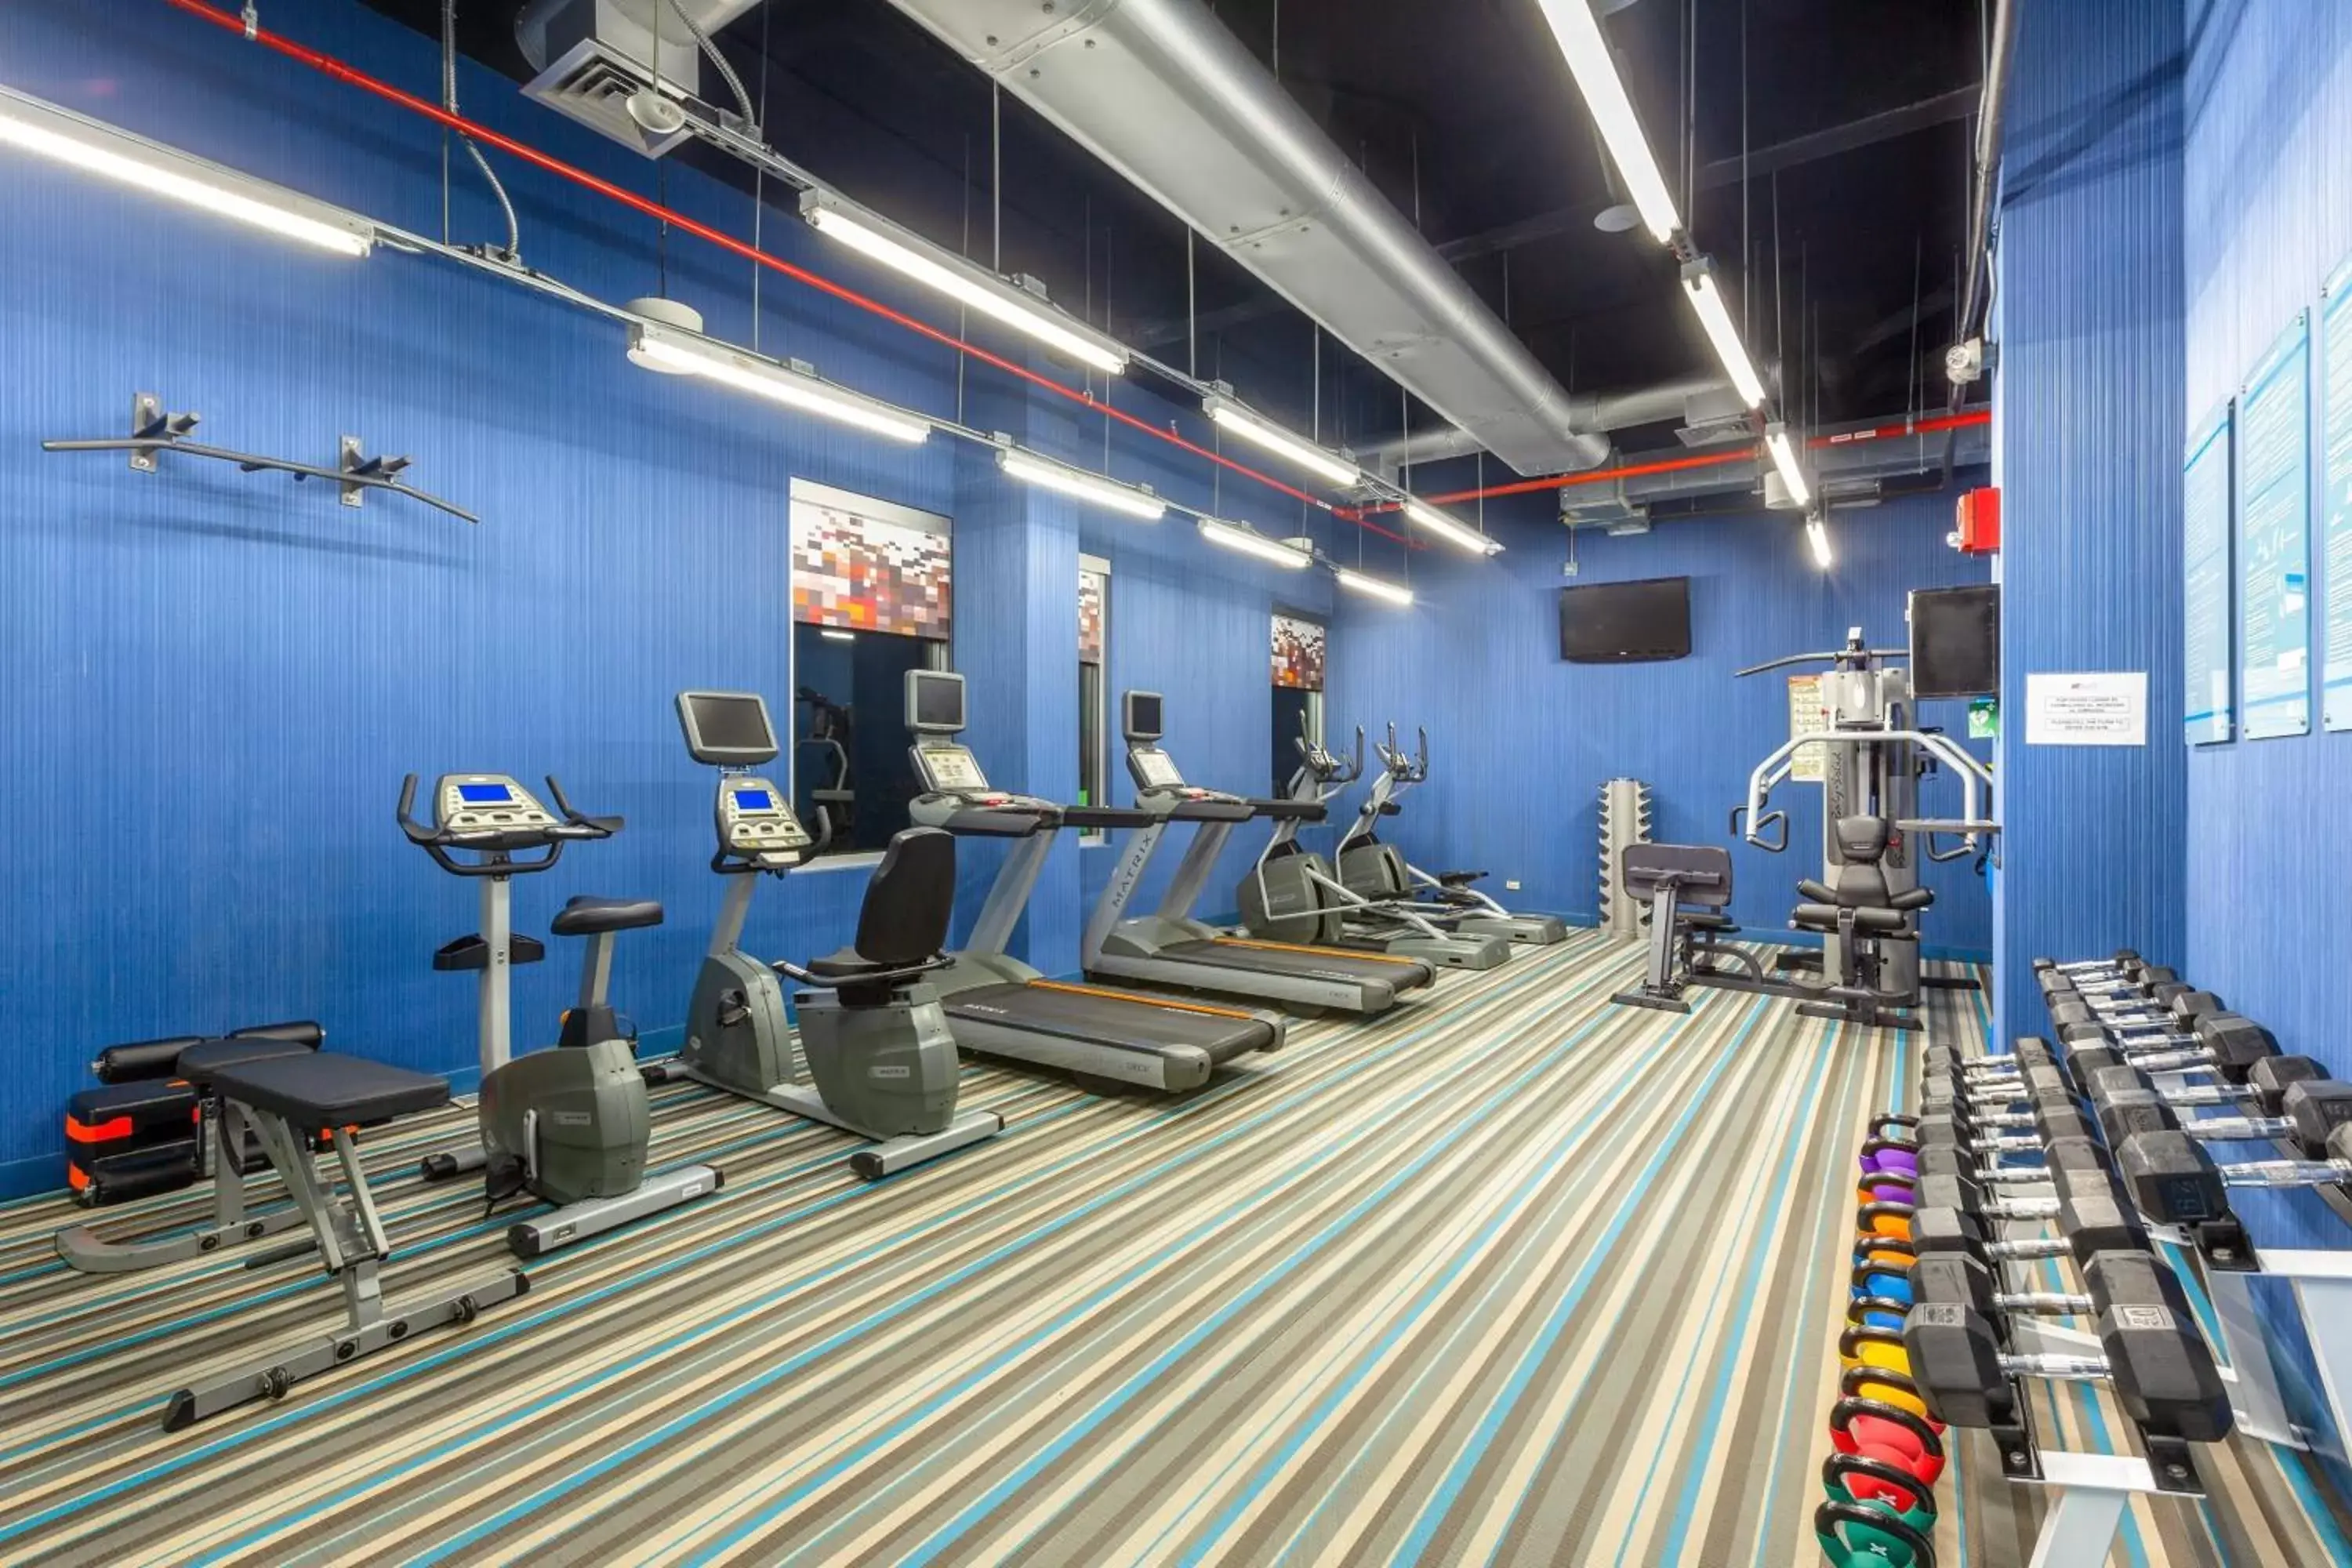 Fitness centre/facilities, Fitness Center/Facilities in Aloft San Jose Hotel, Costa Rica